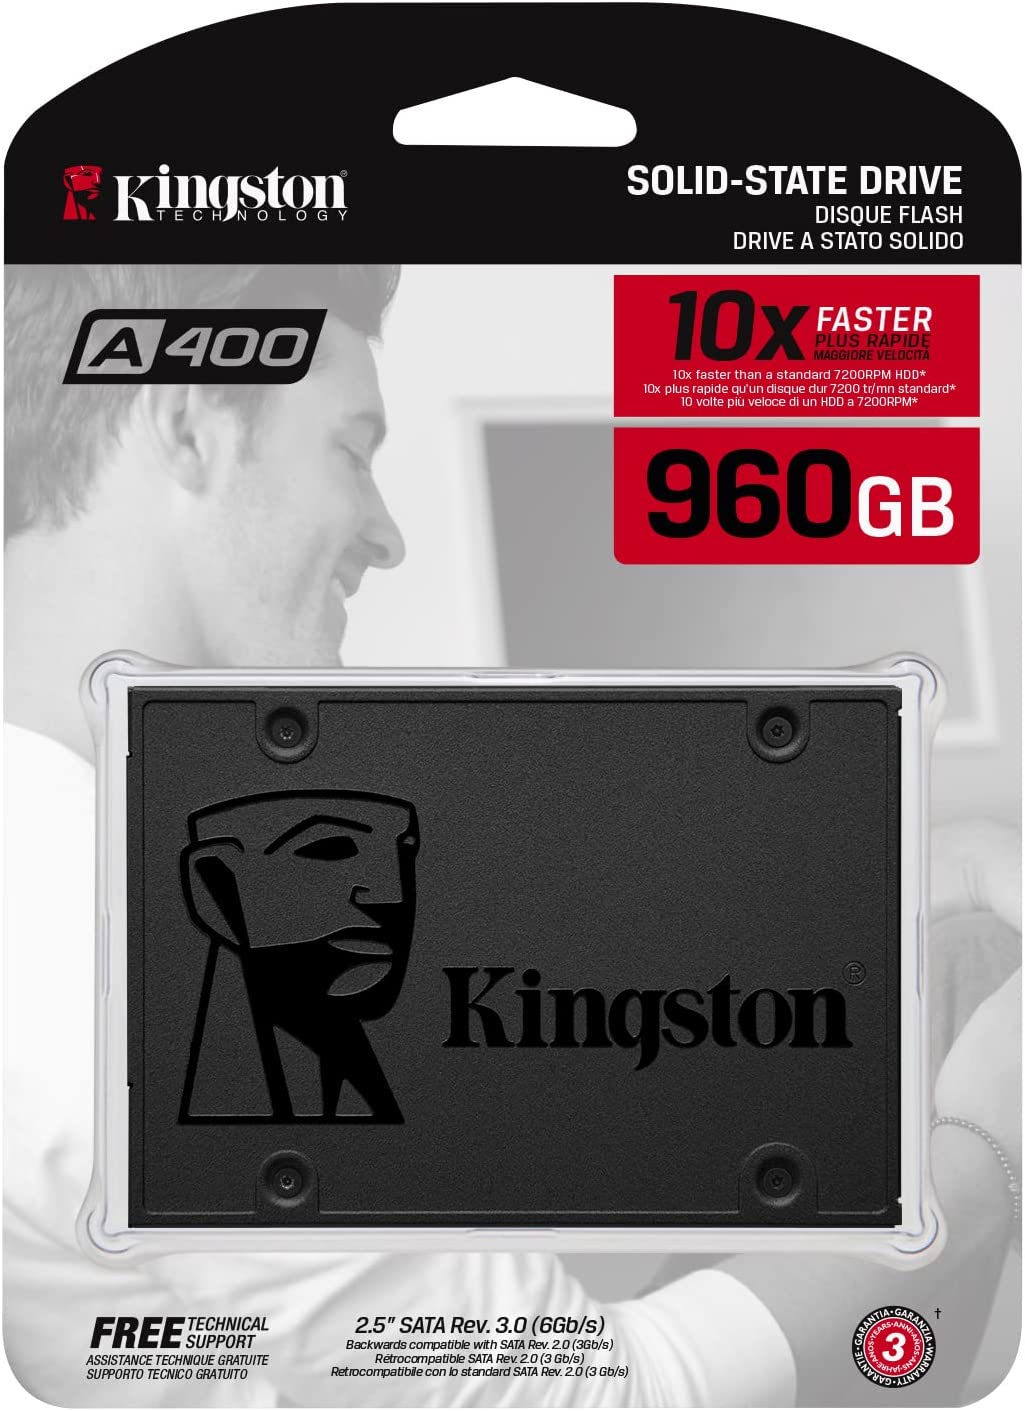 Kingston 960GB A400 SATA3 2.5" Internal SSD $57.99